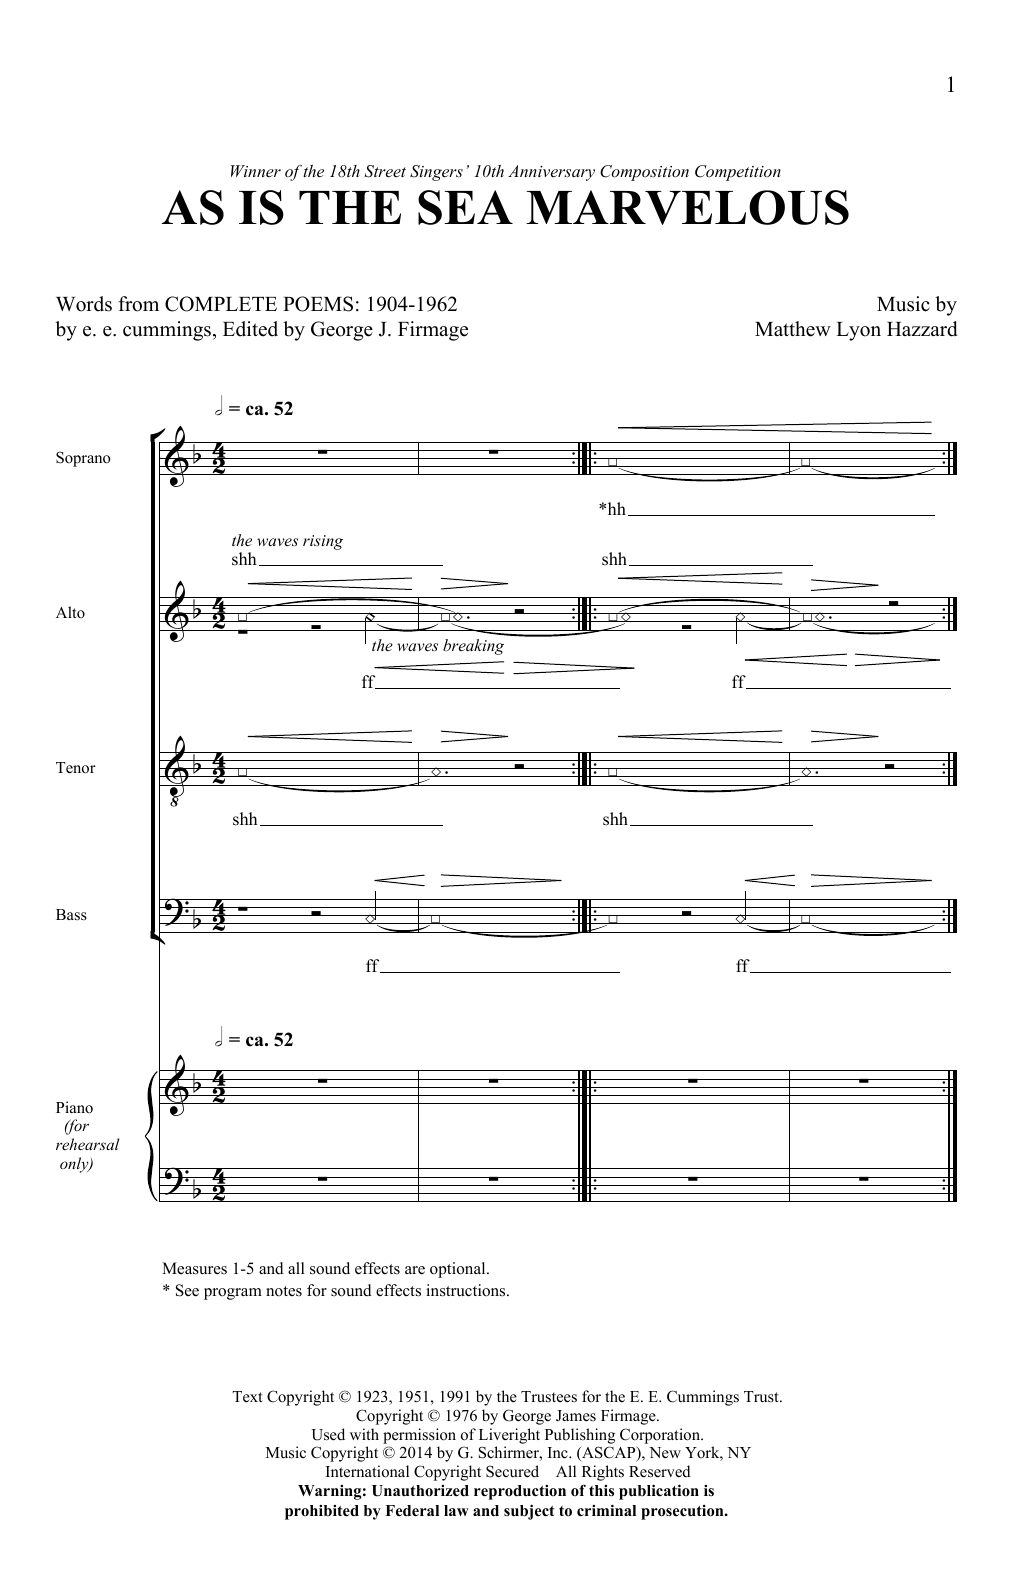 Download Matthew Lyon Hazzard As Is The Sea Marvelous Sheet Music